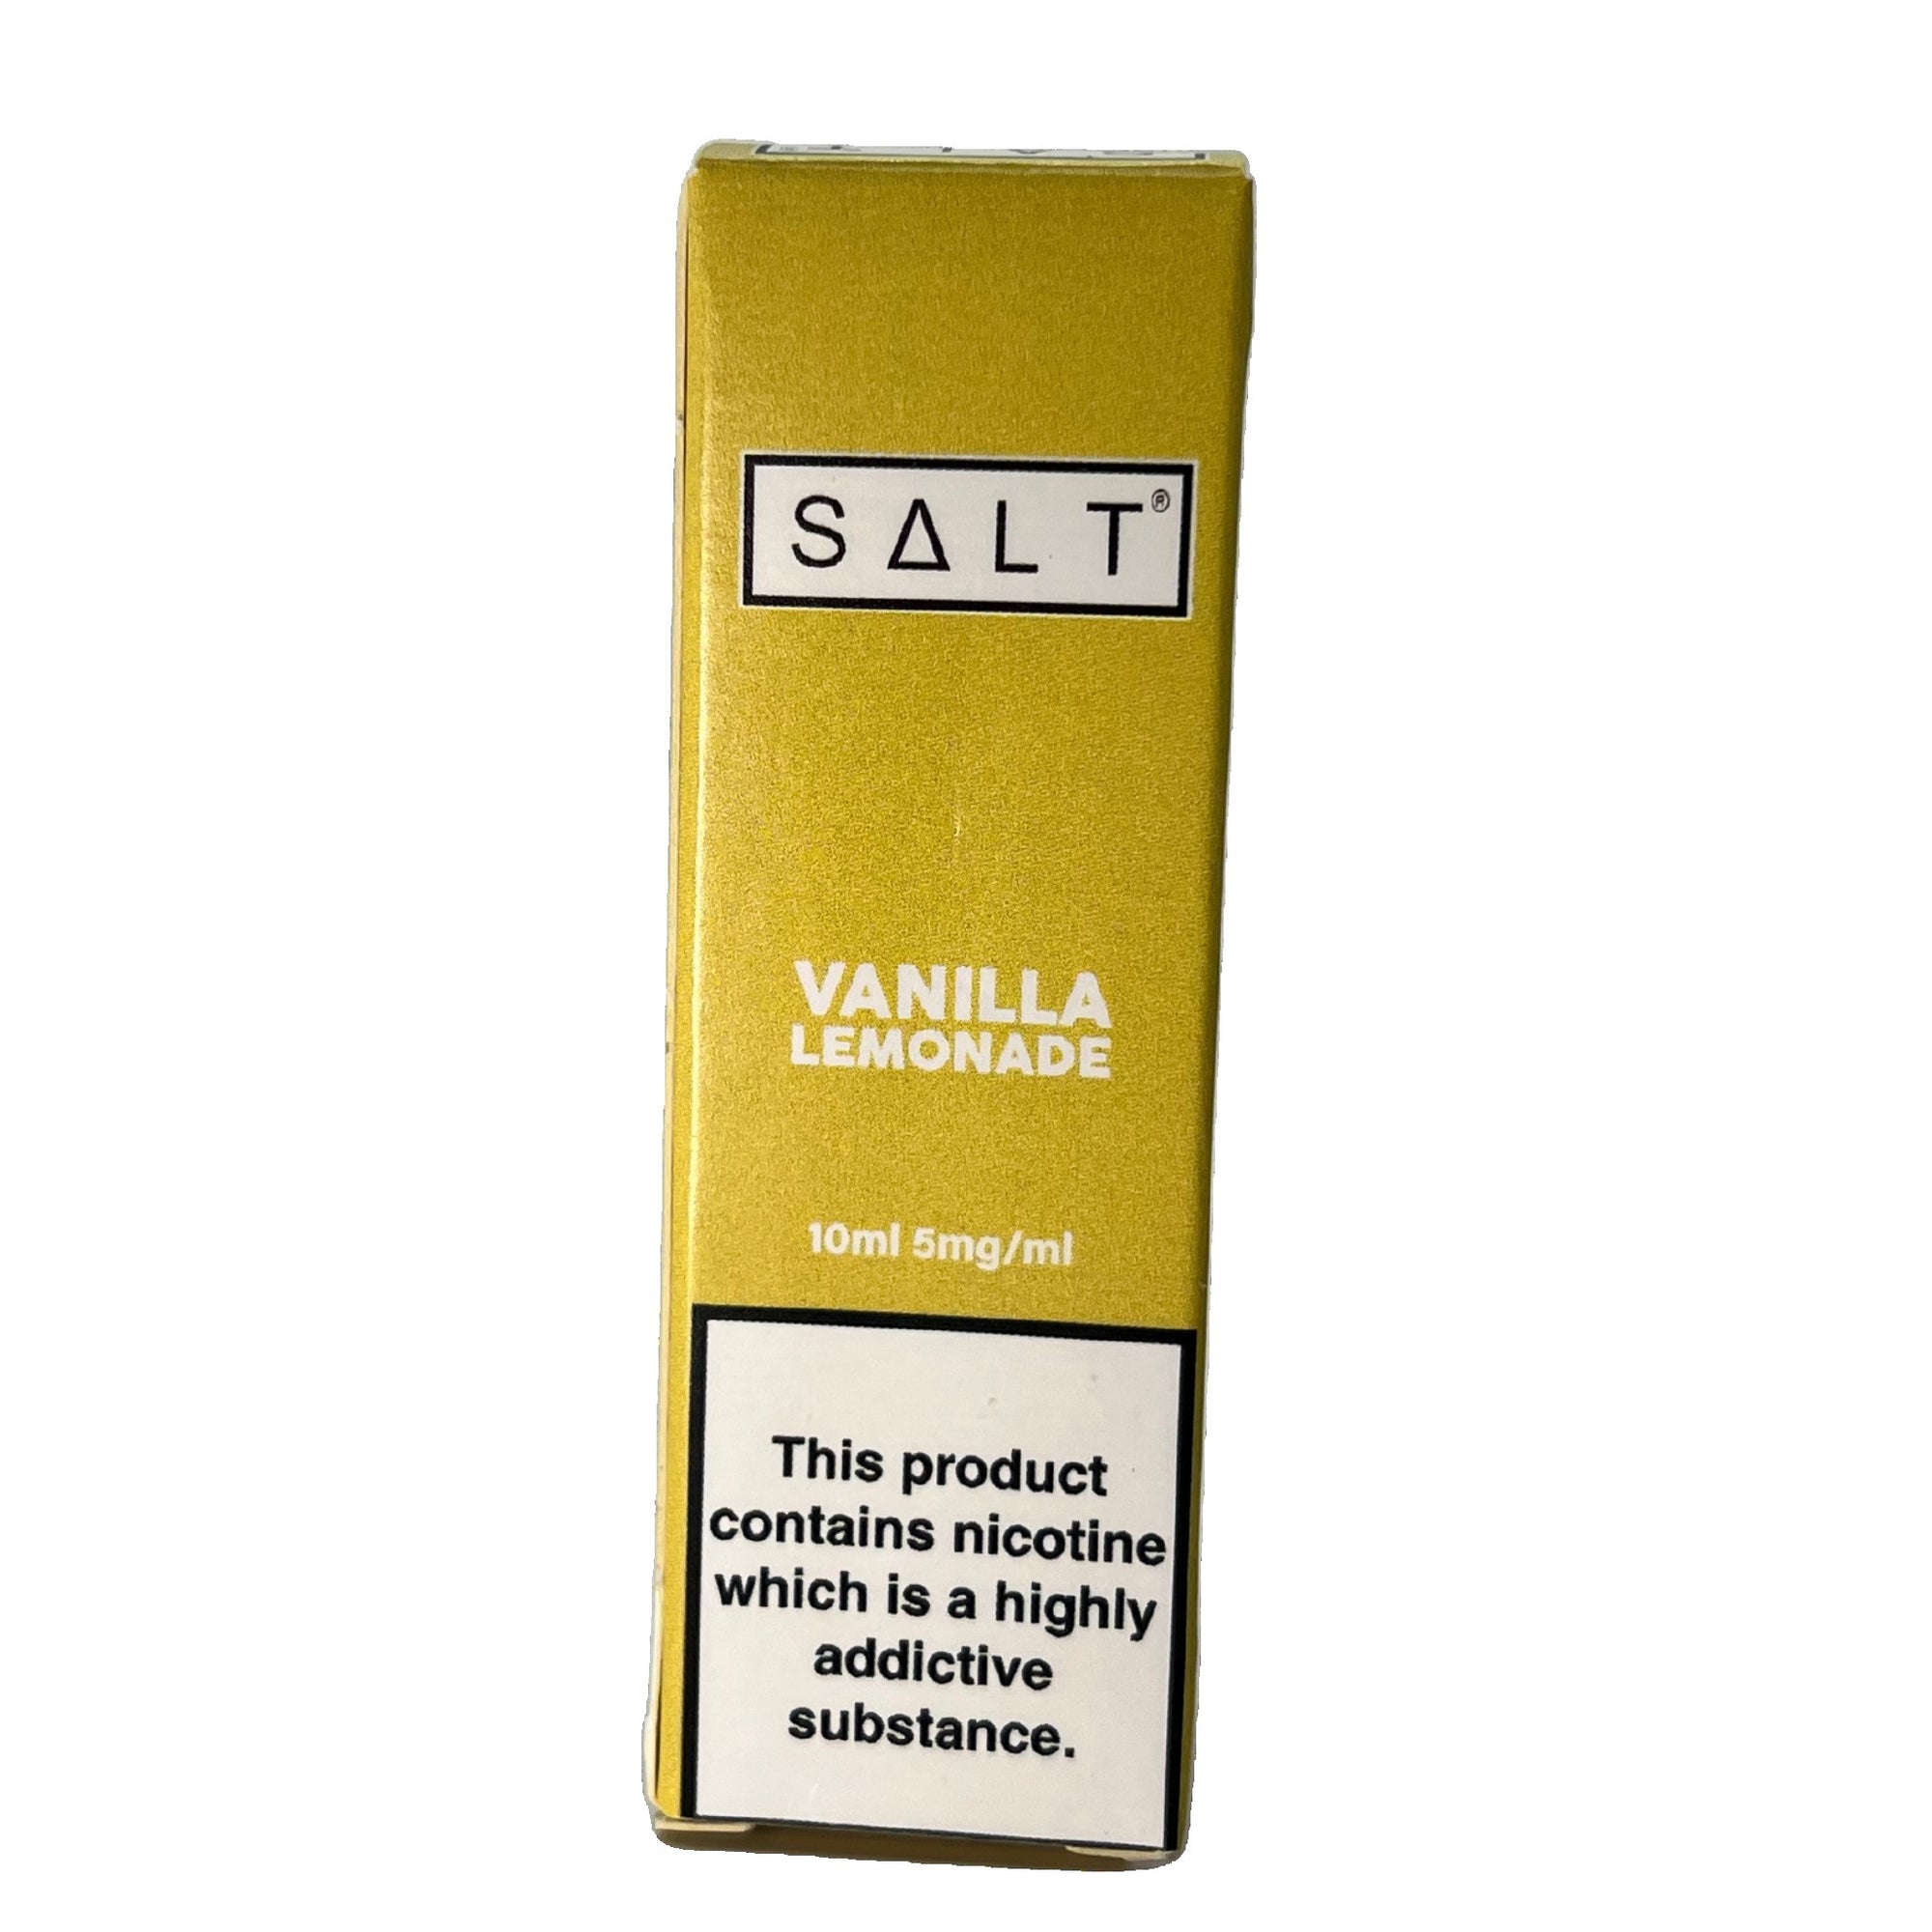 Vanilla Lemonade | SALT 10ml SALT 3.99